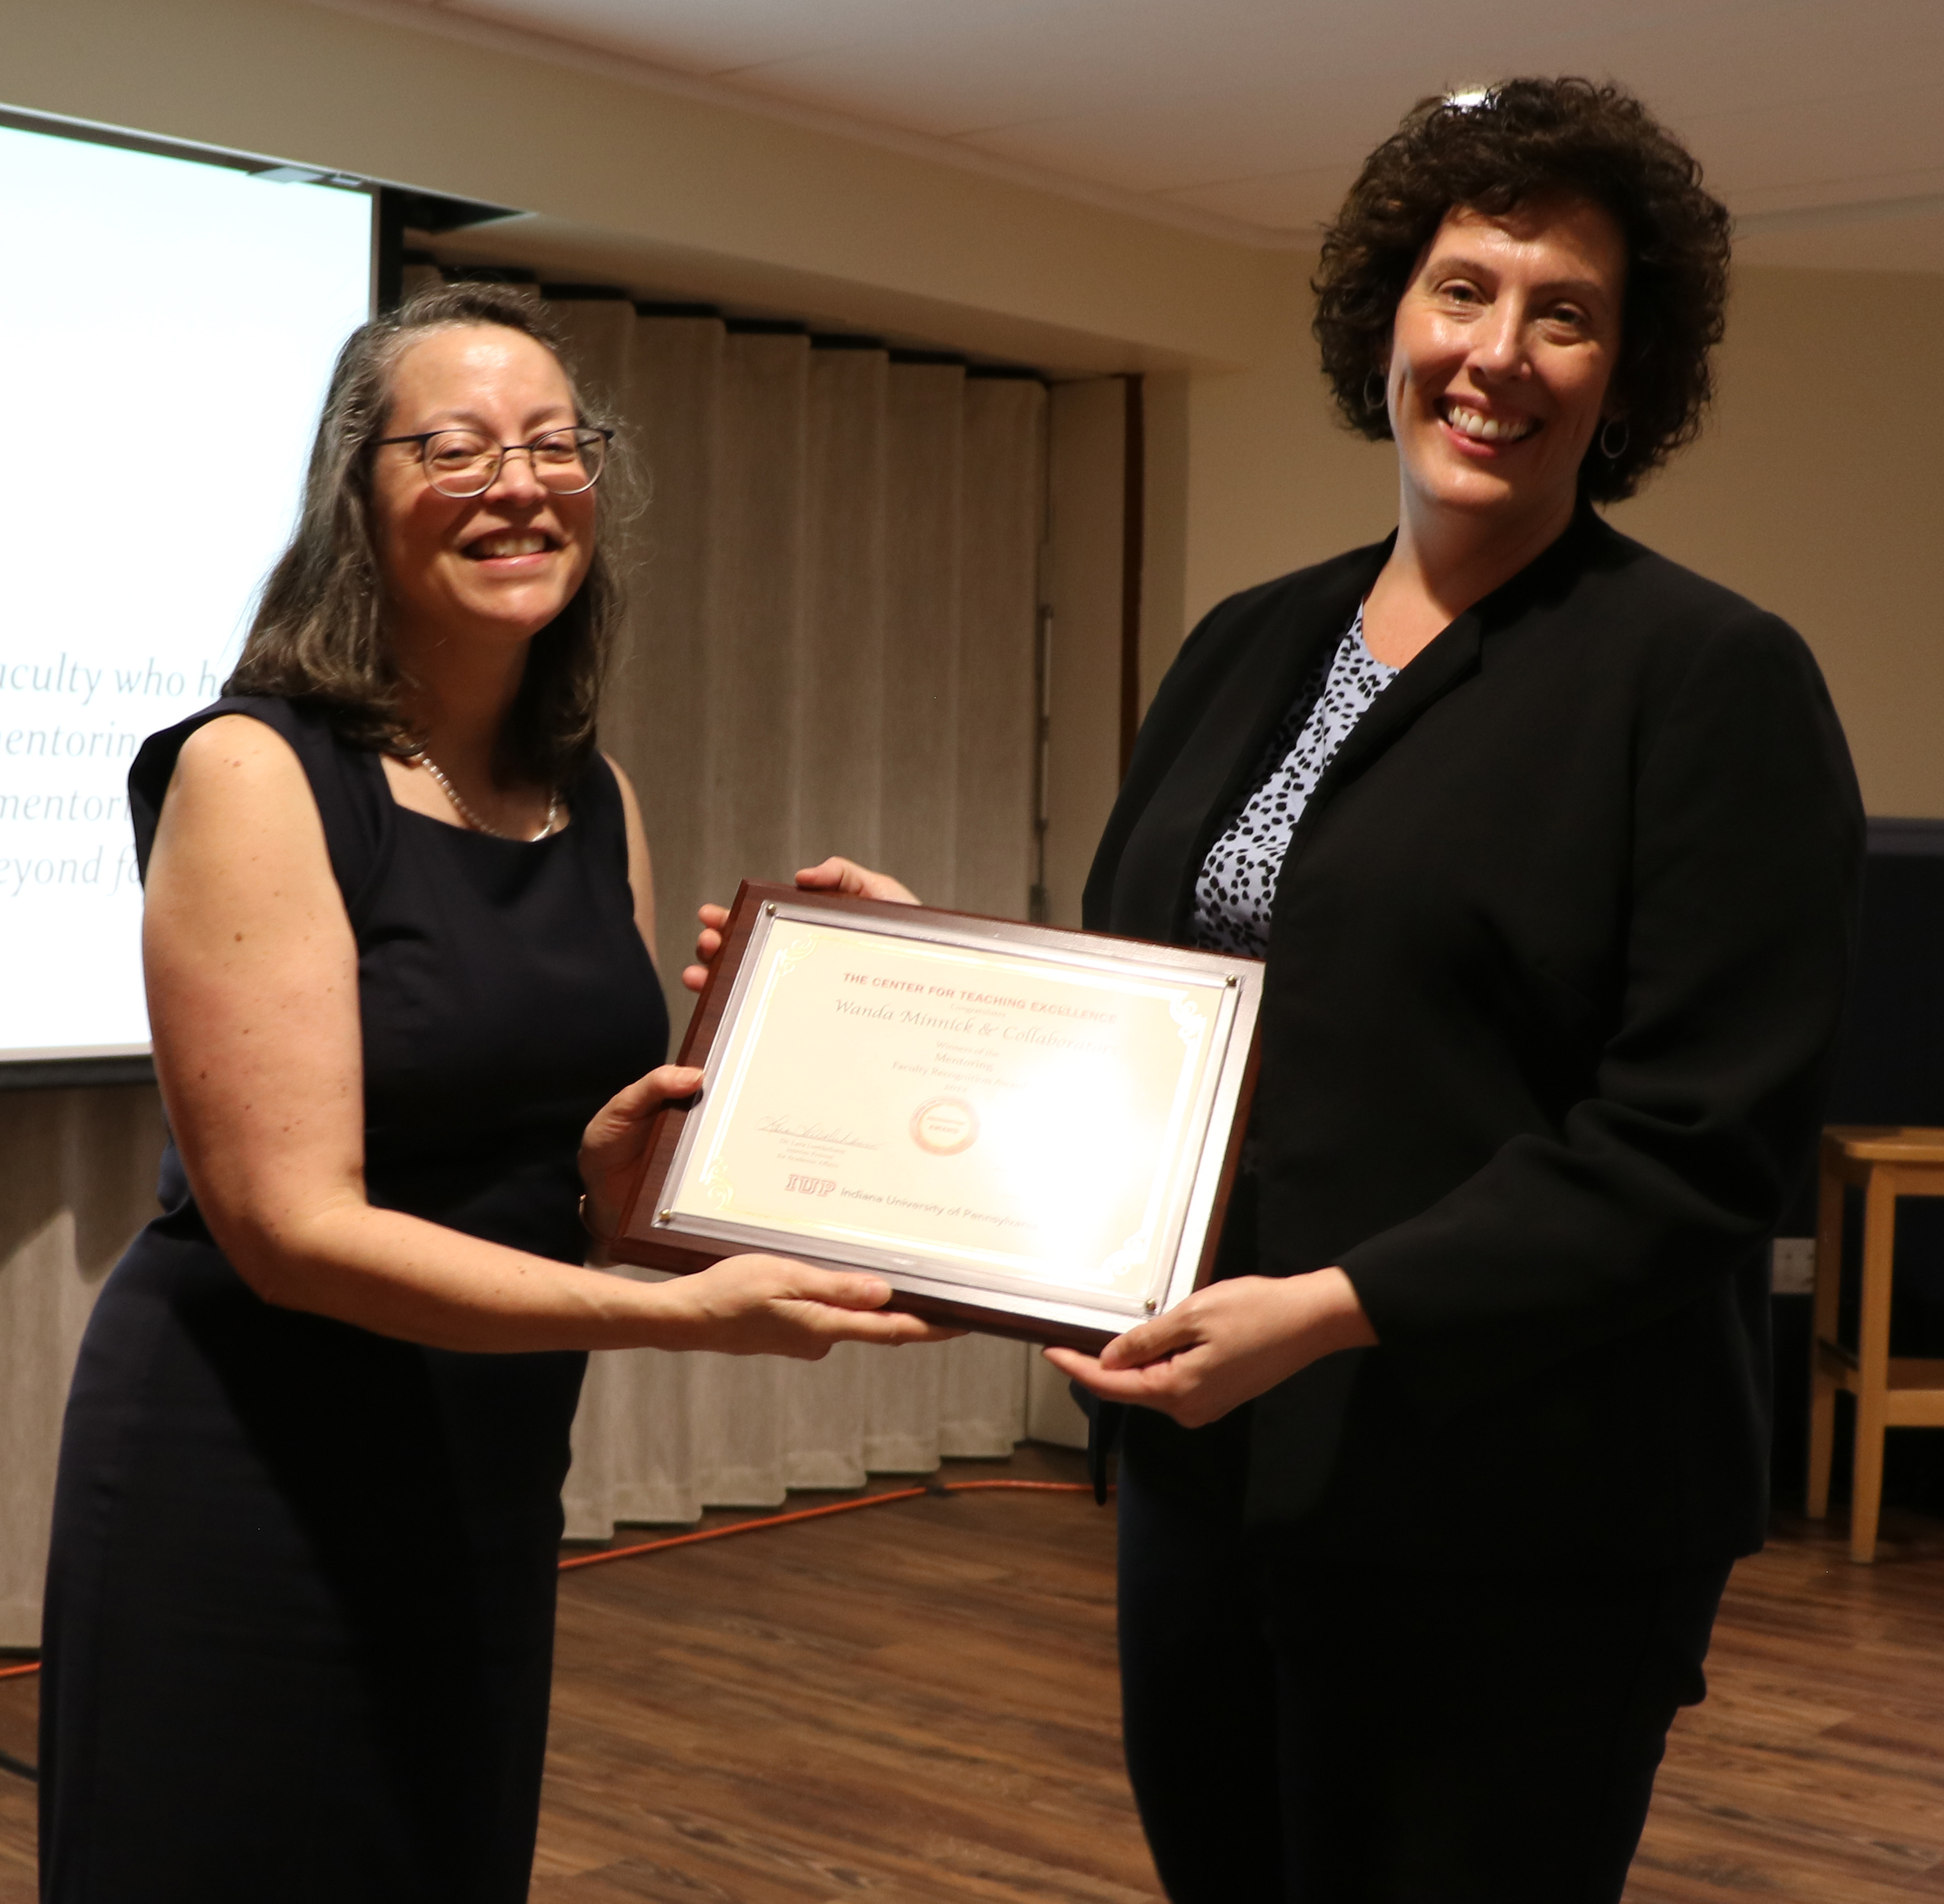 Wanda Minnick receiving her award from Anne Kondo